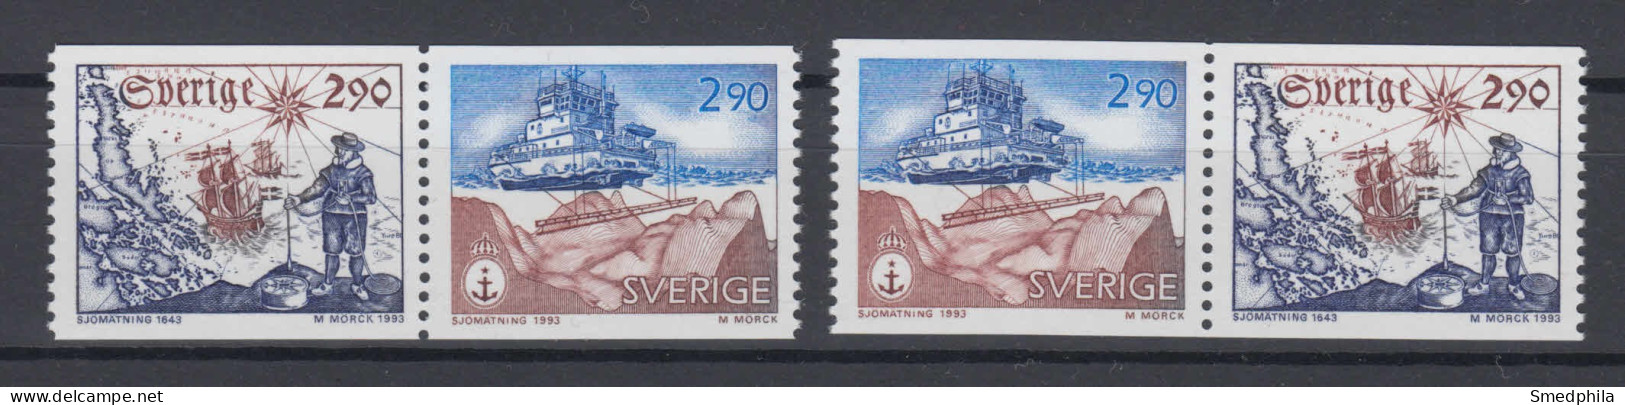 Sweden 1993 - Michel 1797-1798 MNH ** - Unused Stamps